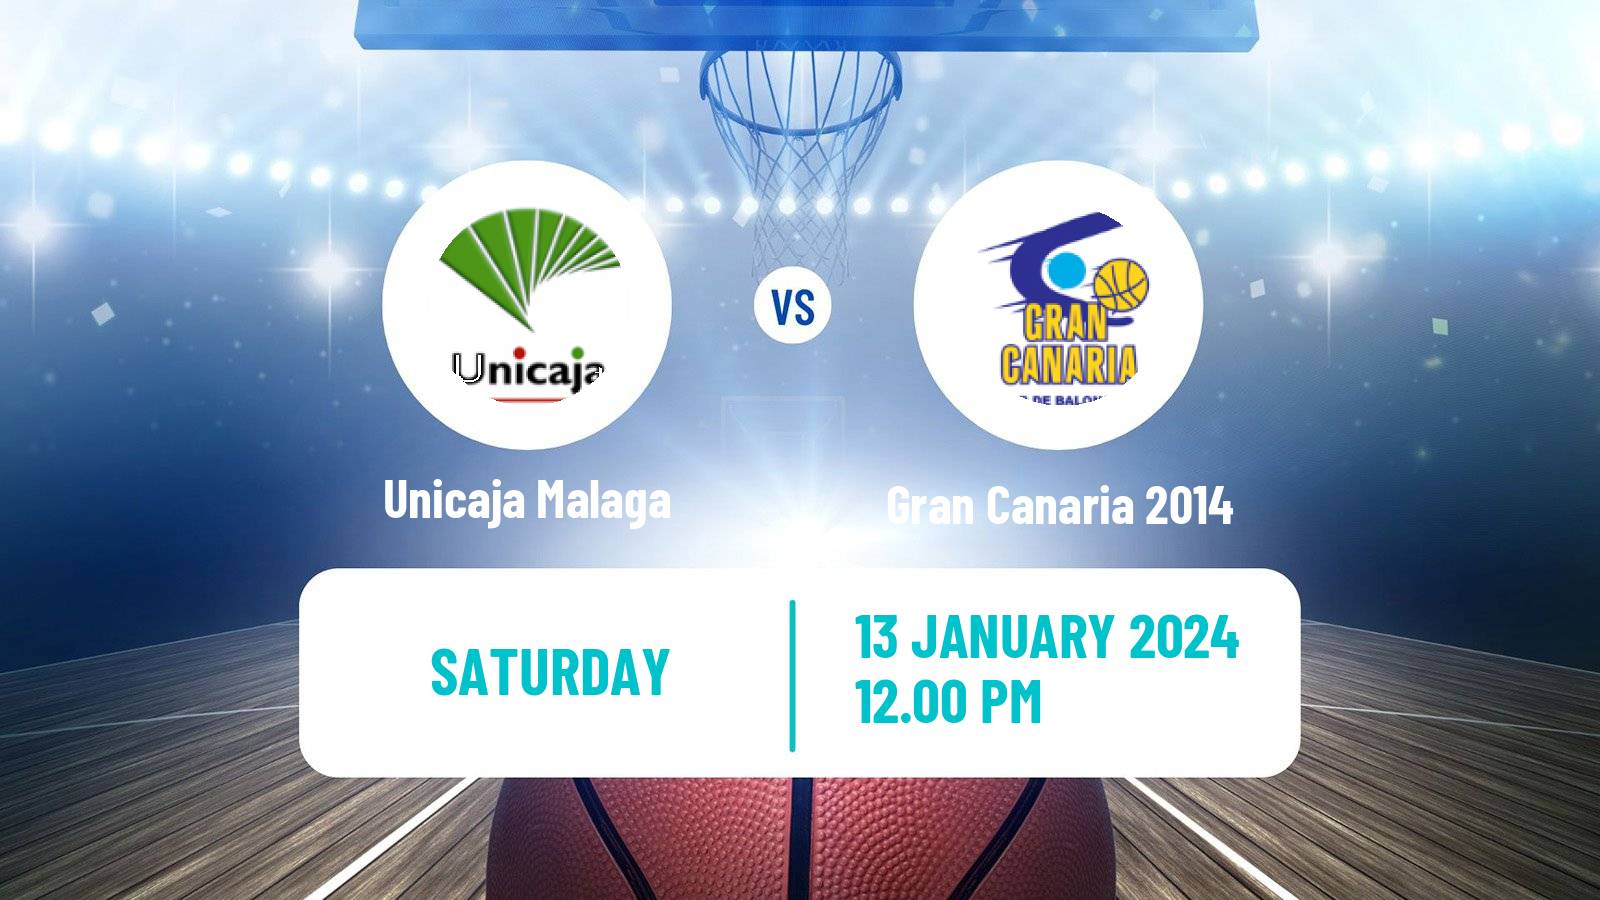 Basketball Spanish ACB League Unicaja Malaga - Gran Canaria 2014